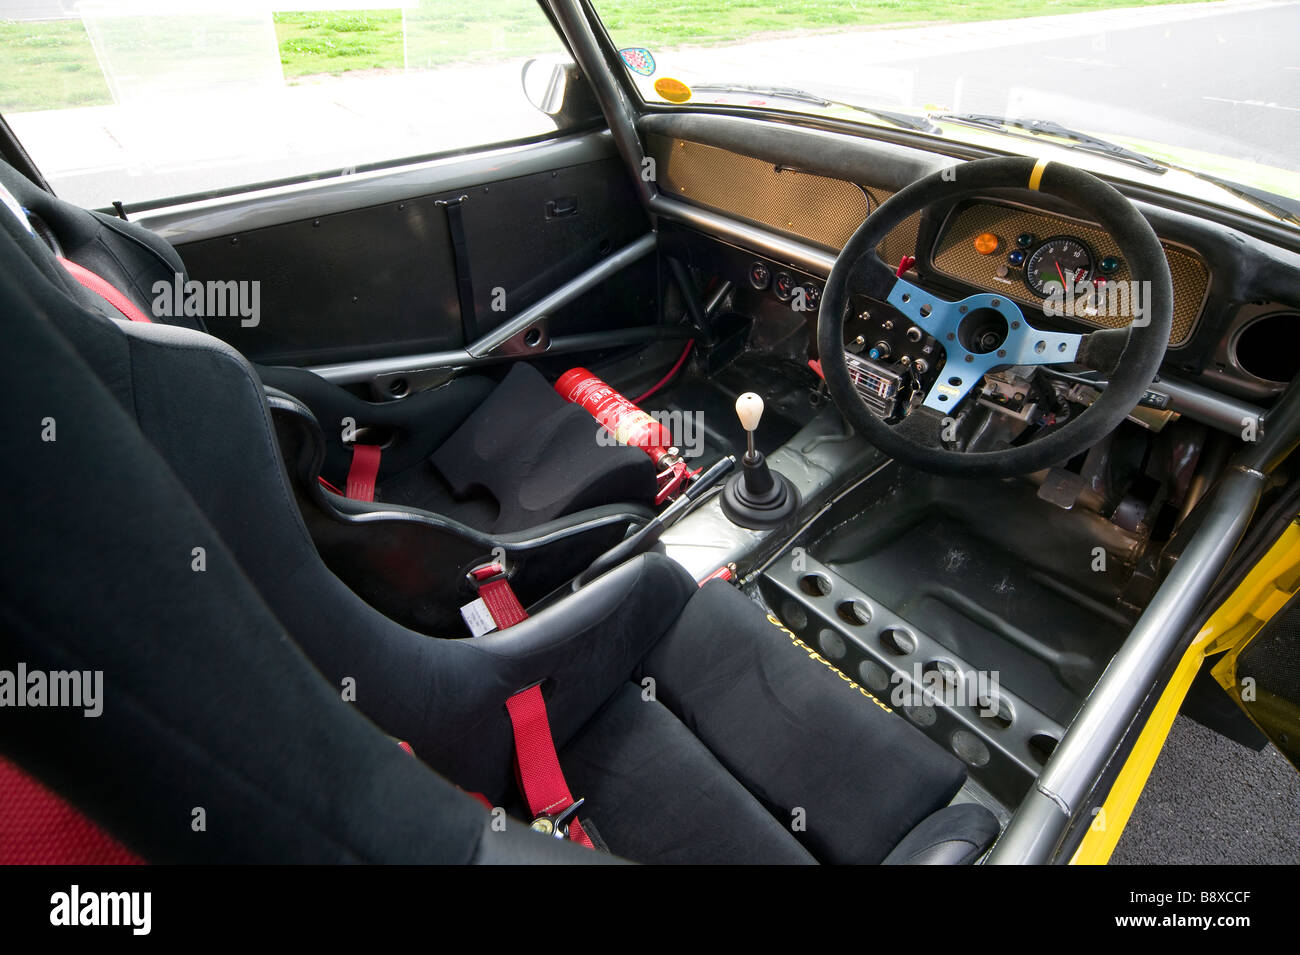 Modified Racing Ford Escort Interior Stock Photo 22708127